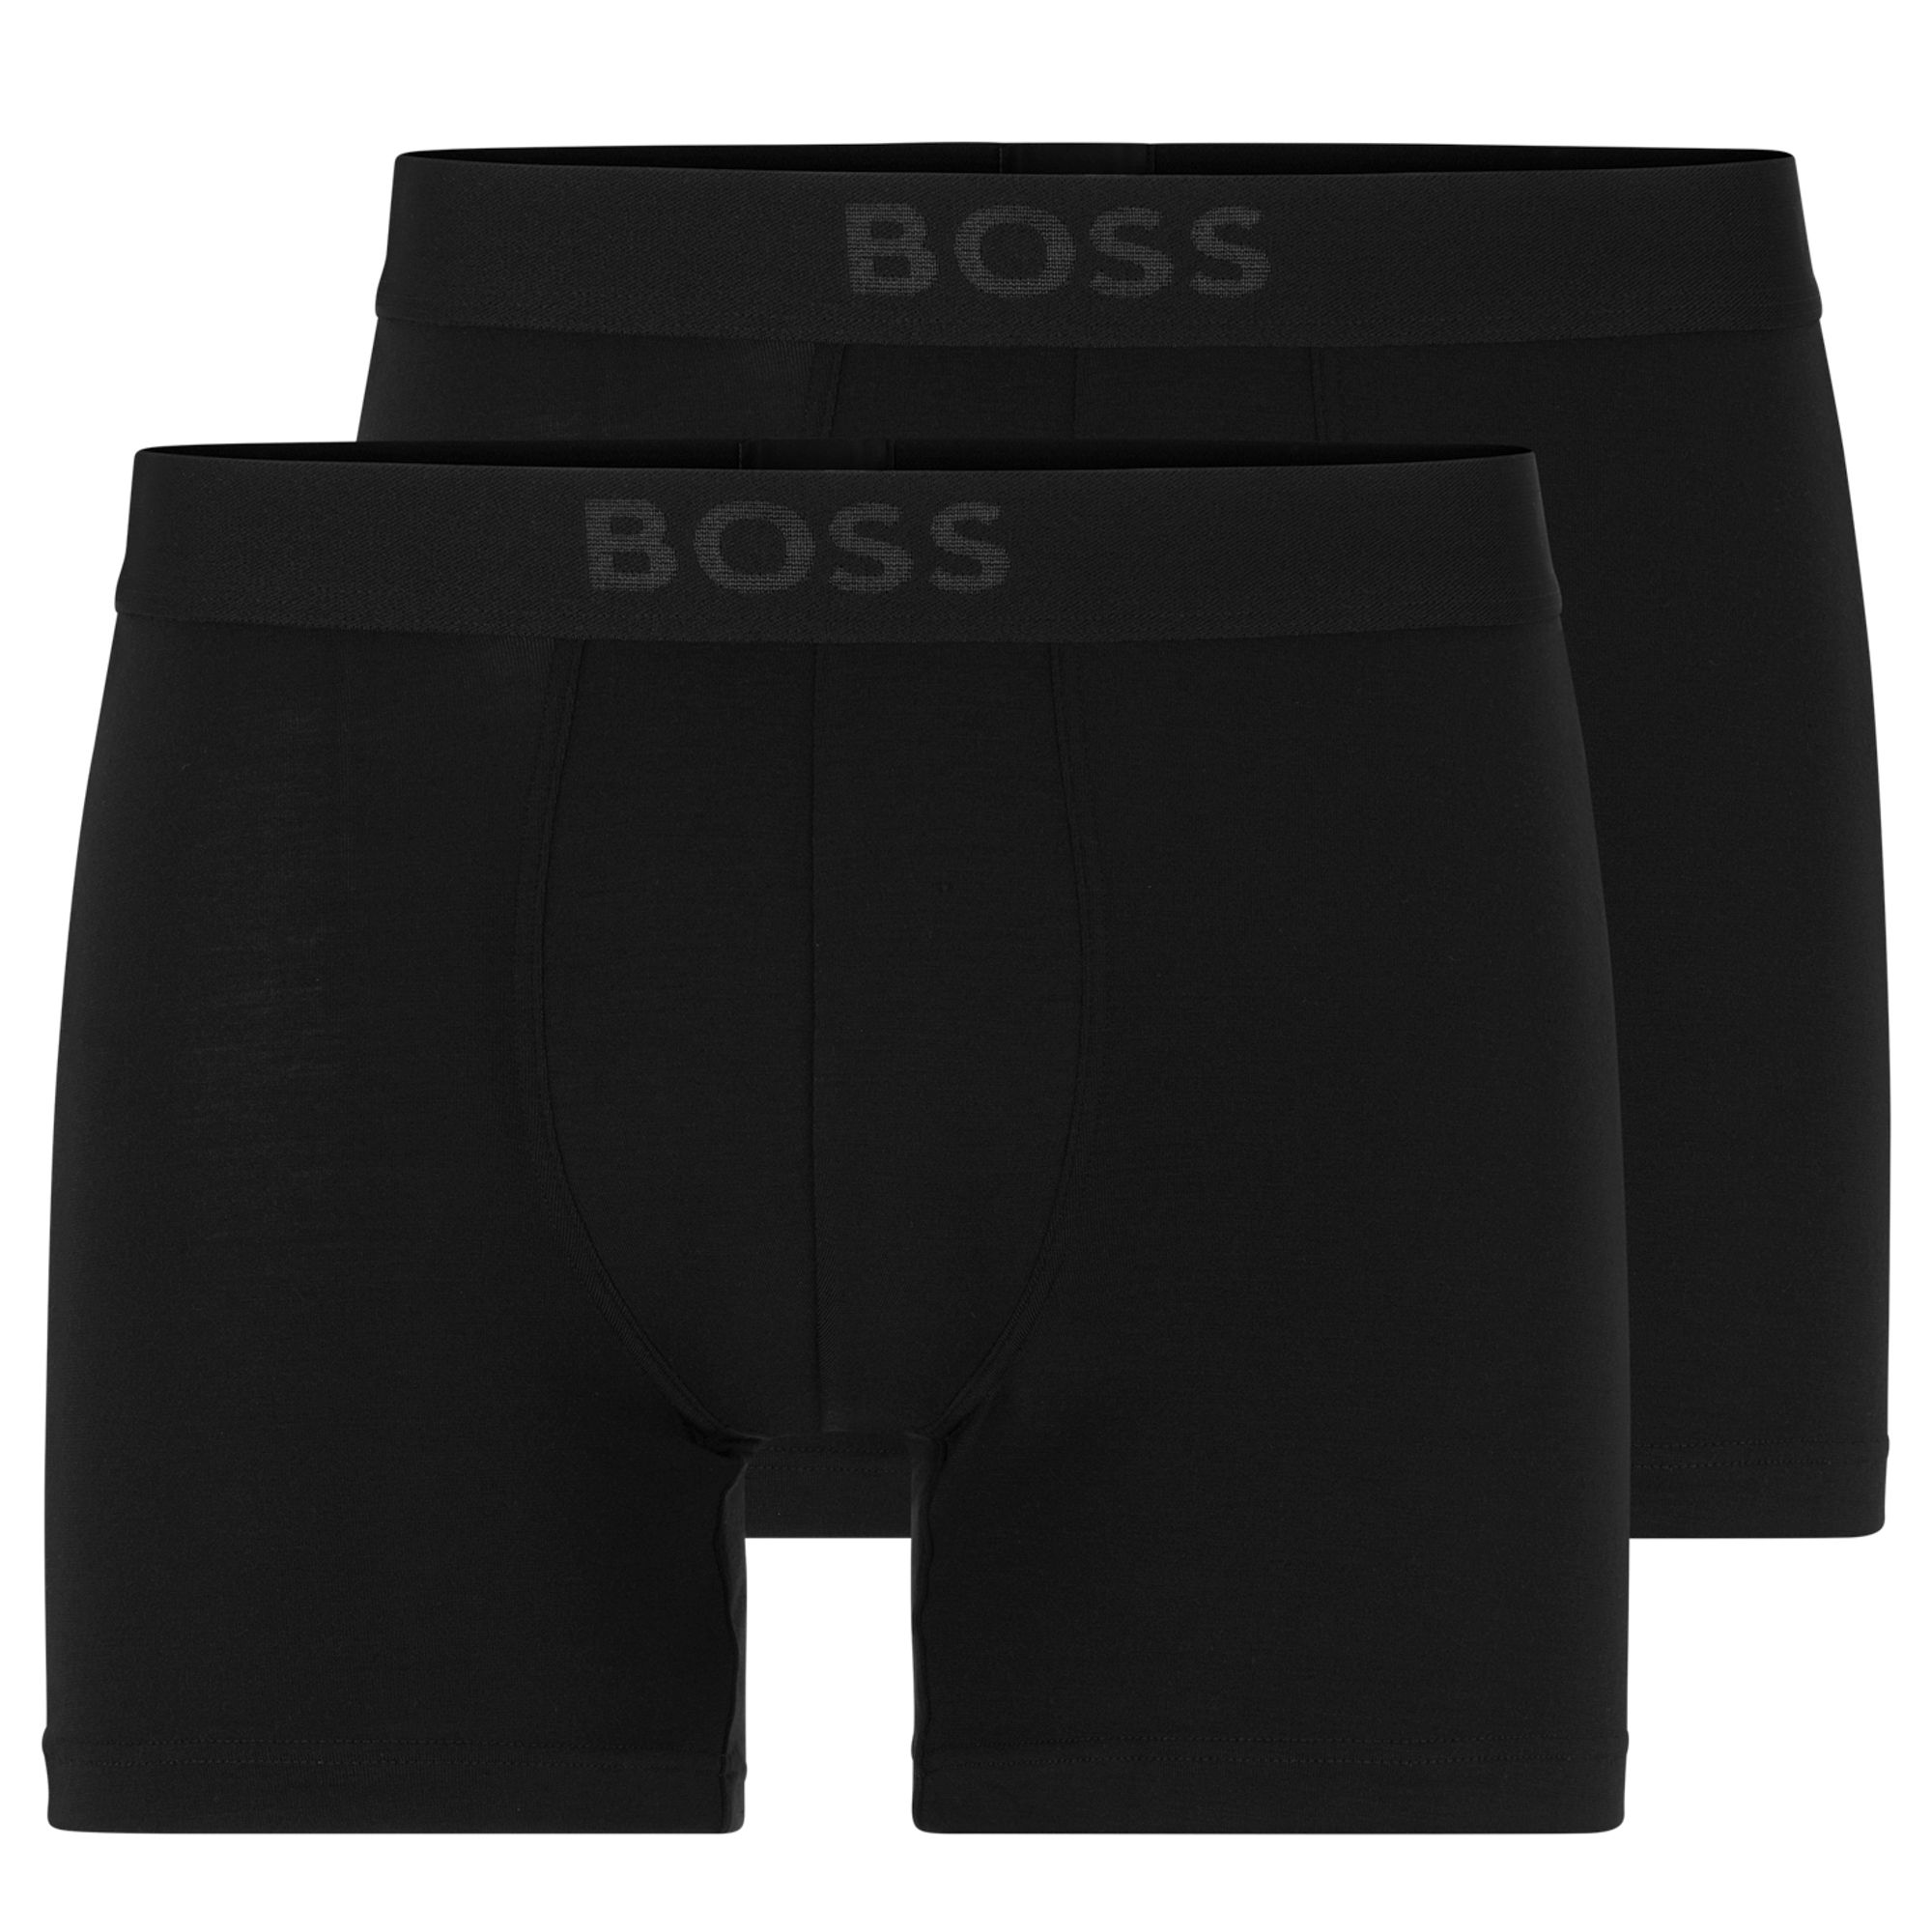 Boss Boxershort 2-pack Zwart 082270-001-L